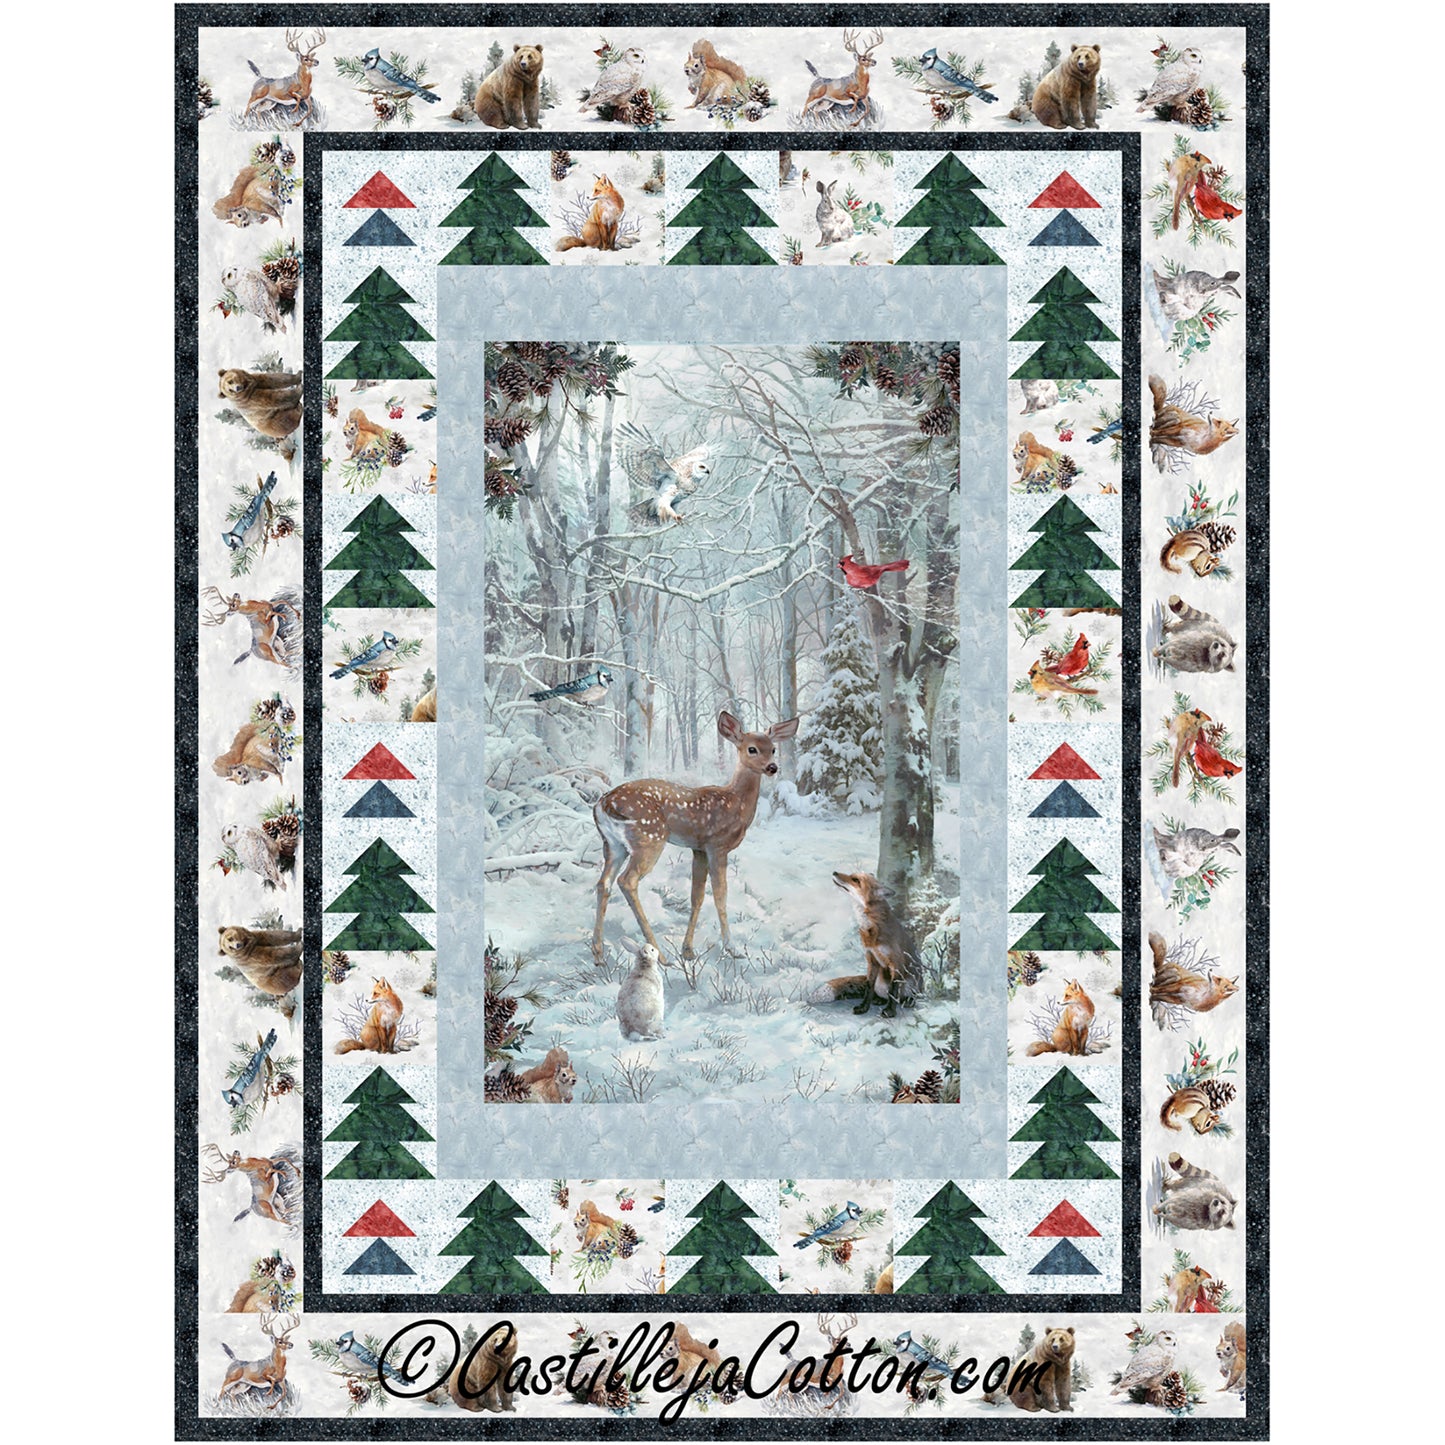 Deer and Friends Quilt CJC-59421e - Downloadable  Pattern